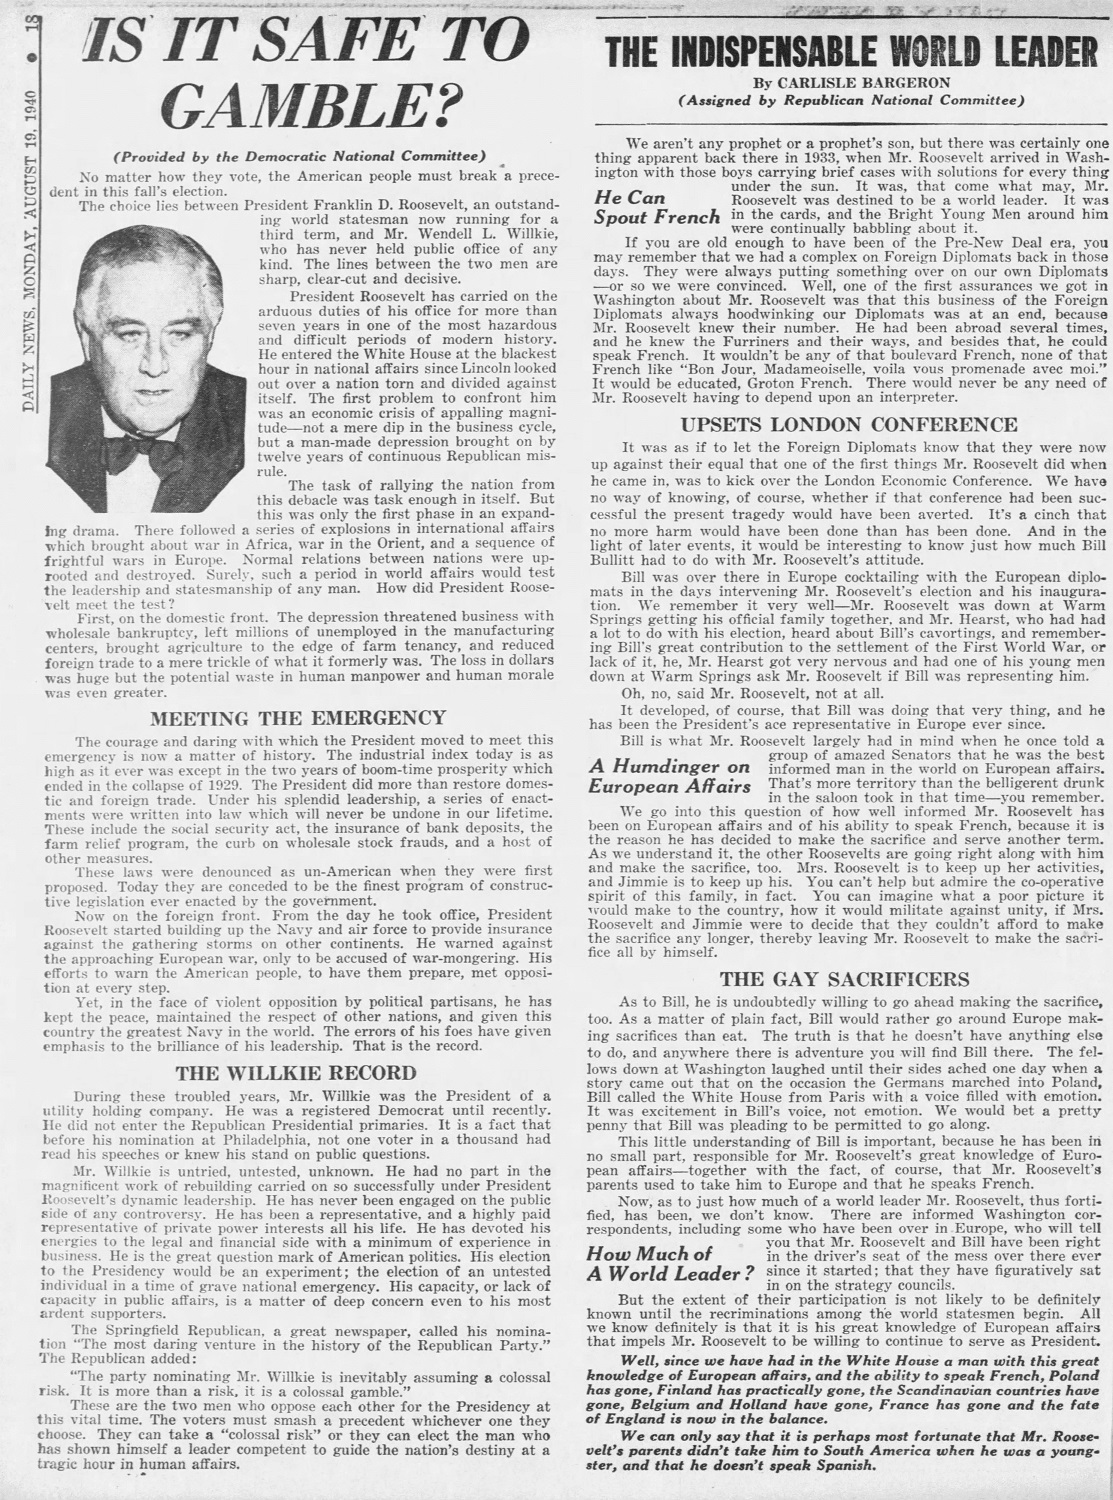 Daily_News_Mon__Aug_19__1940_(2).jpg